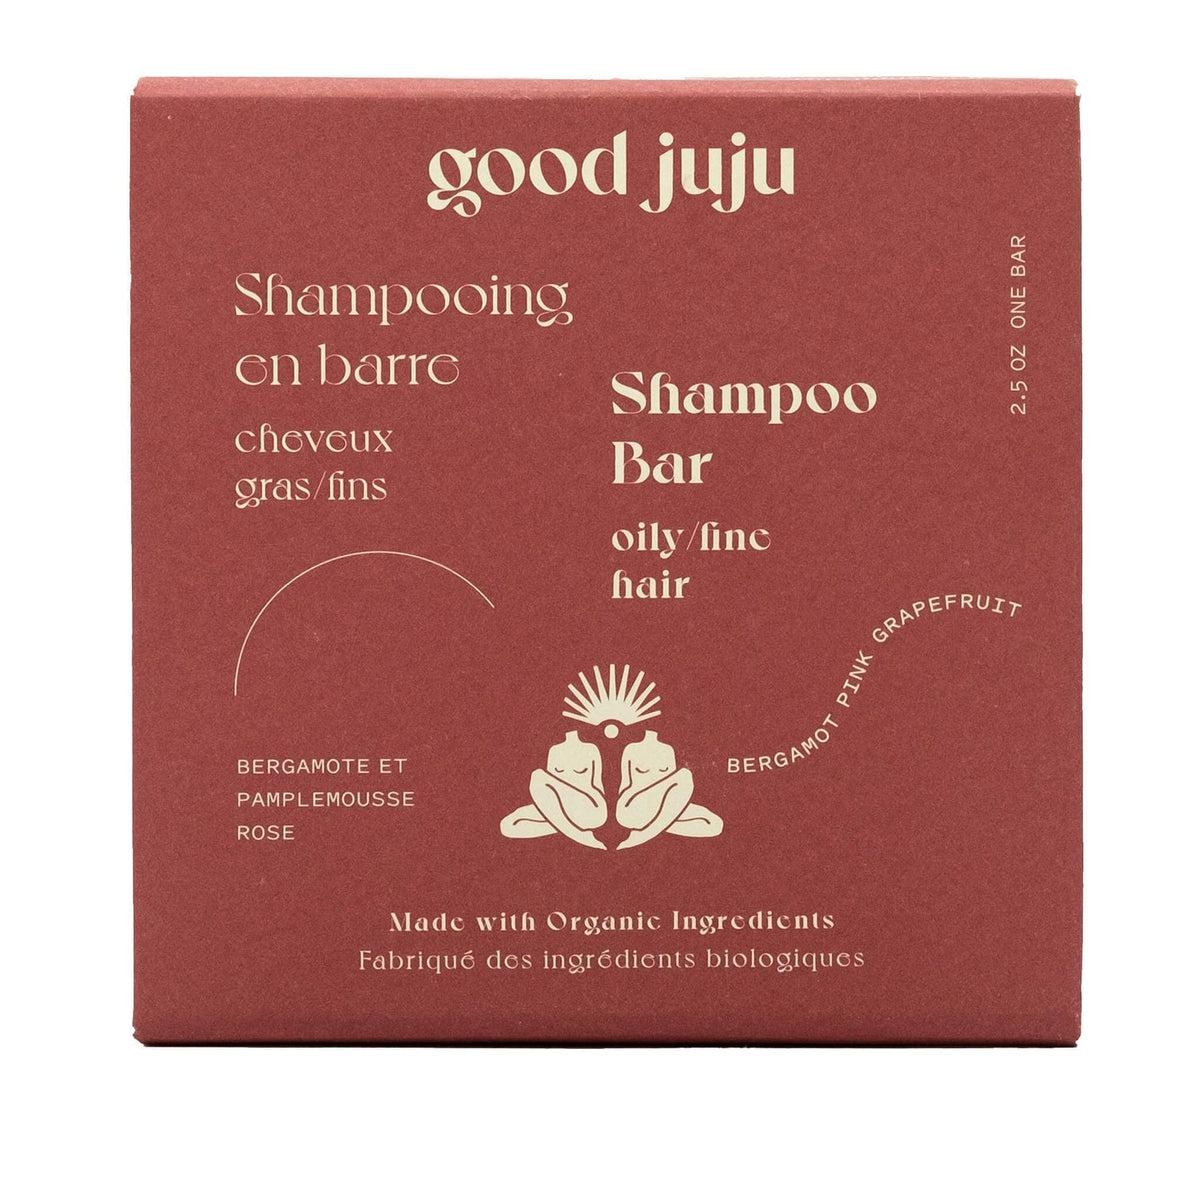 Good Juju Shampoo Bar for Oily/Fine Hair